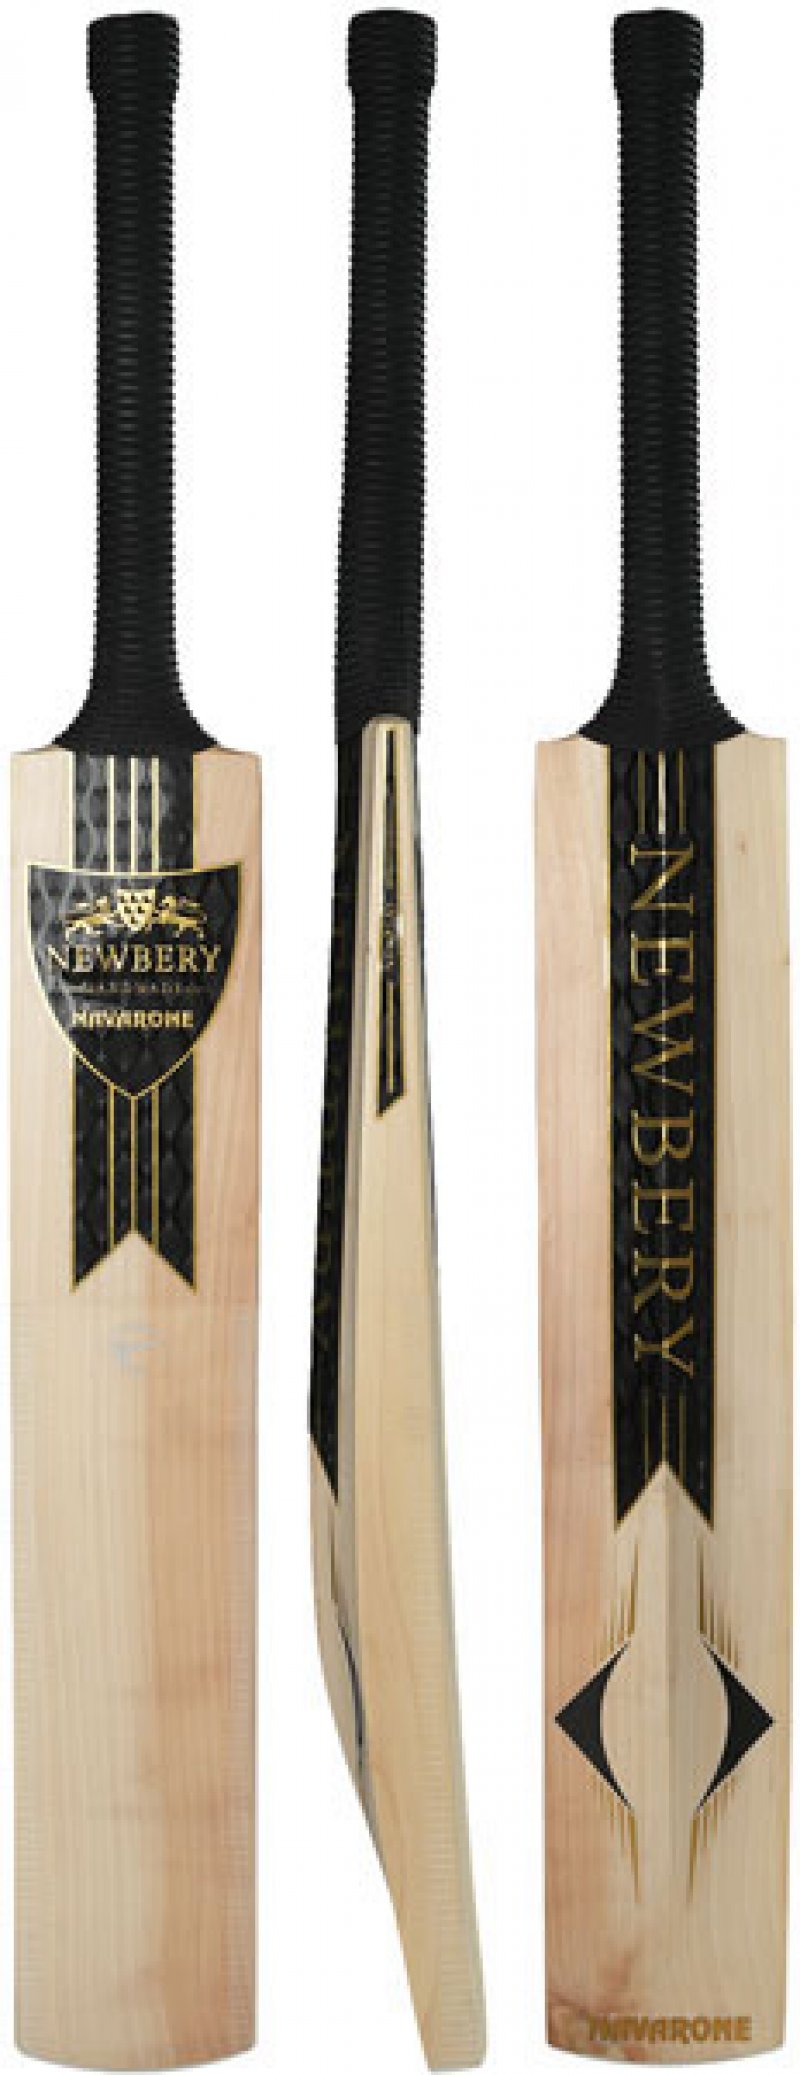 Newbery Navarone 5 Star Cricket Bat